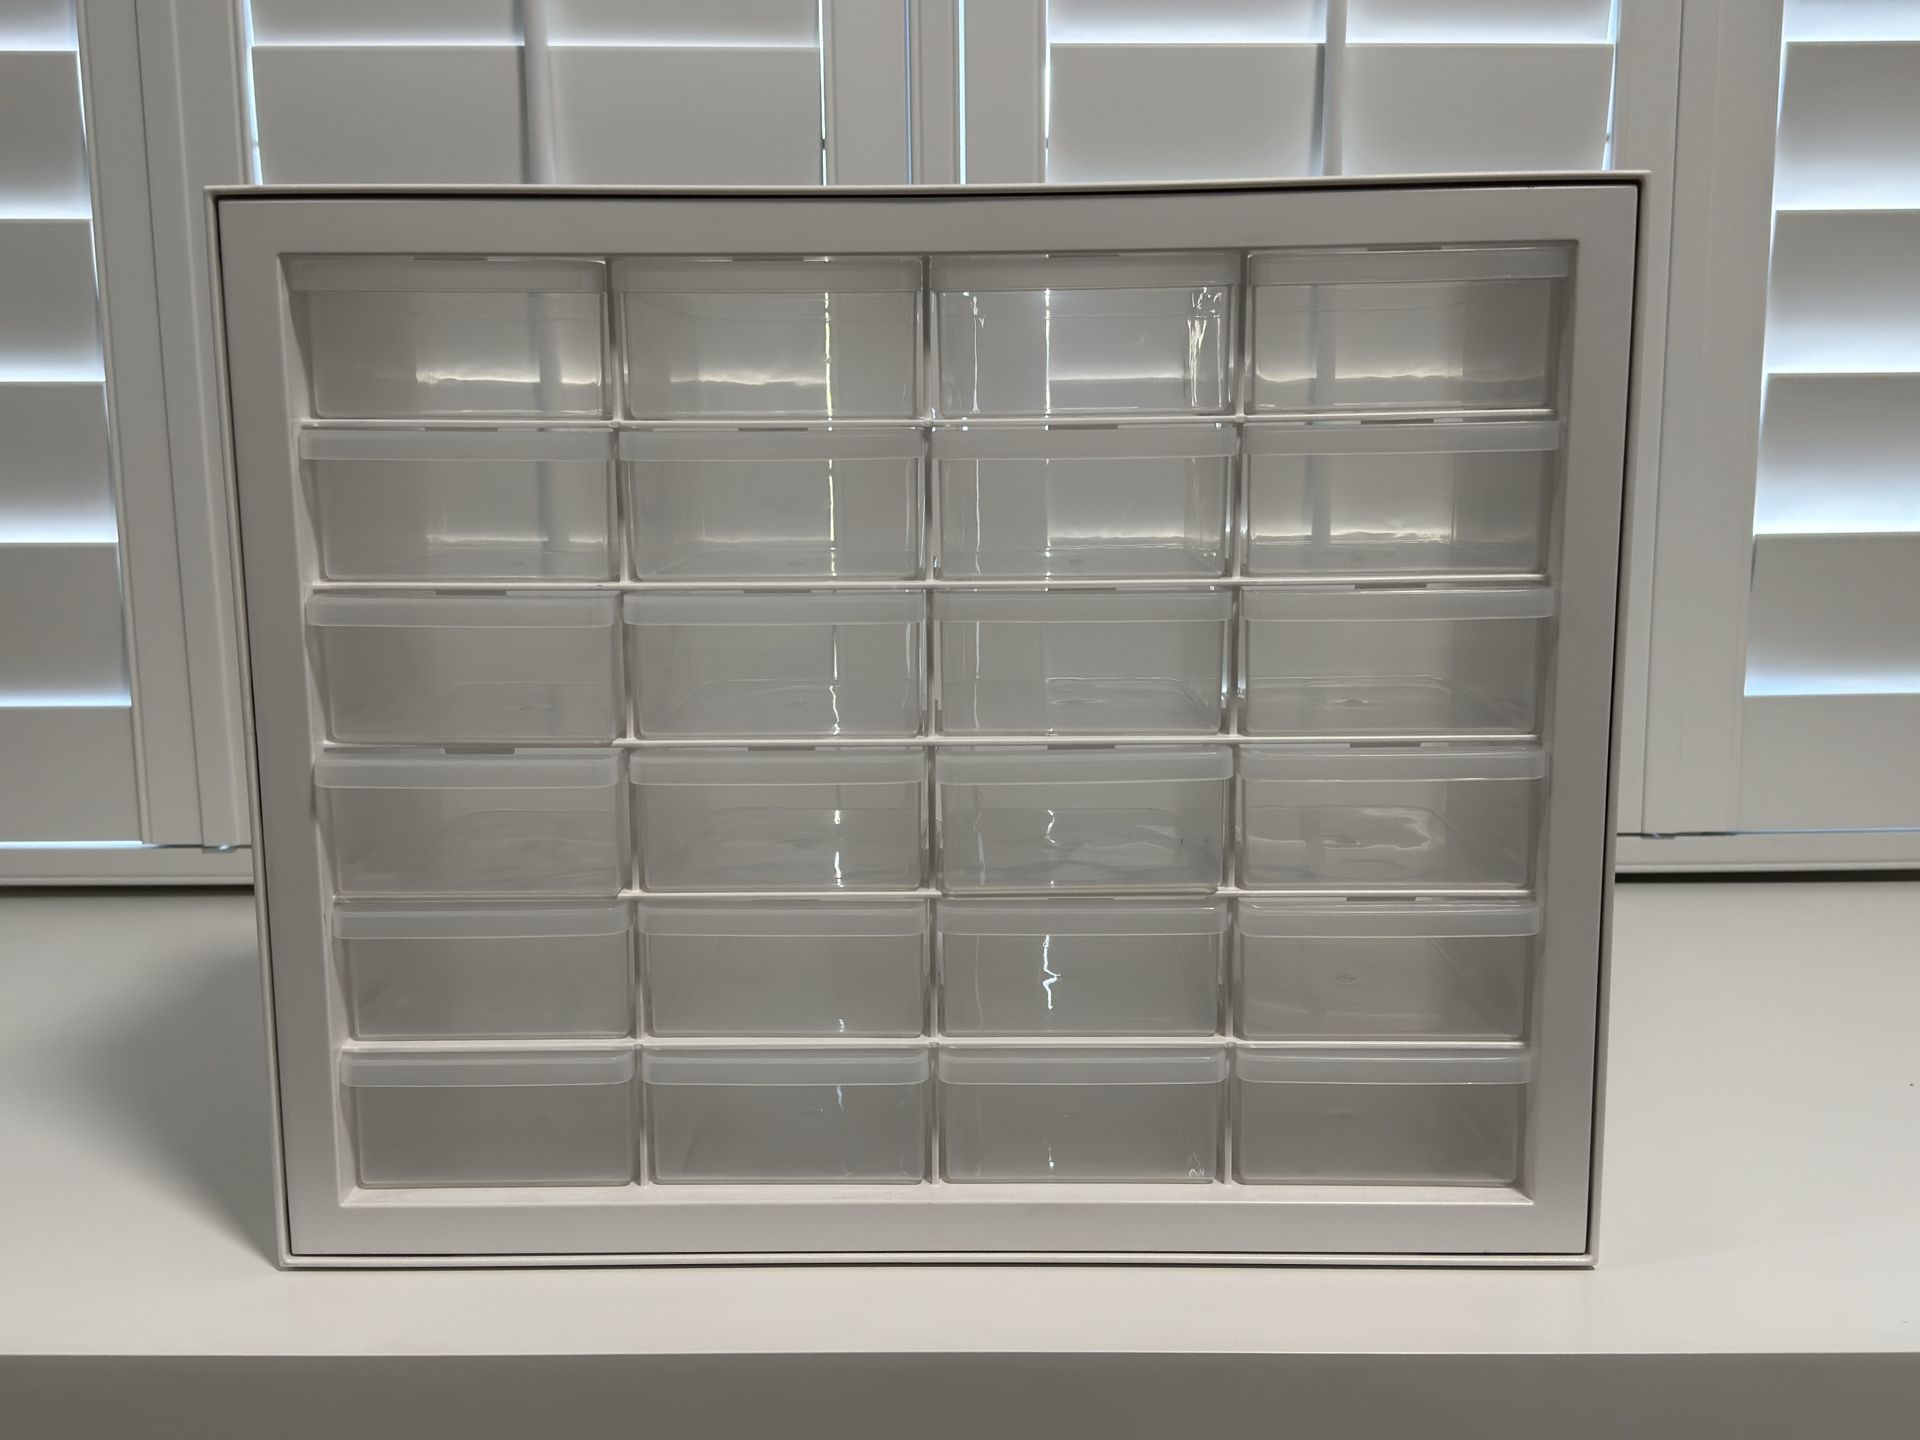 24 Drawer Craft Cabinet - Multi drawer Storage